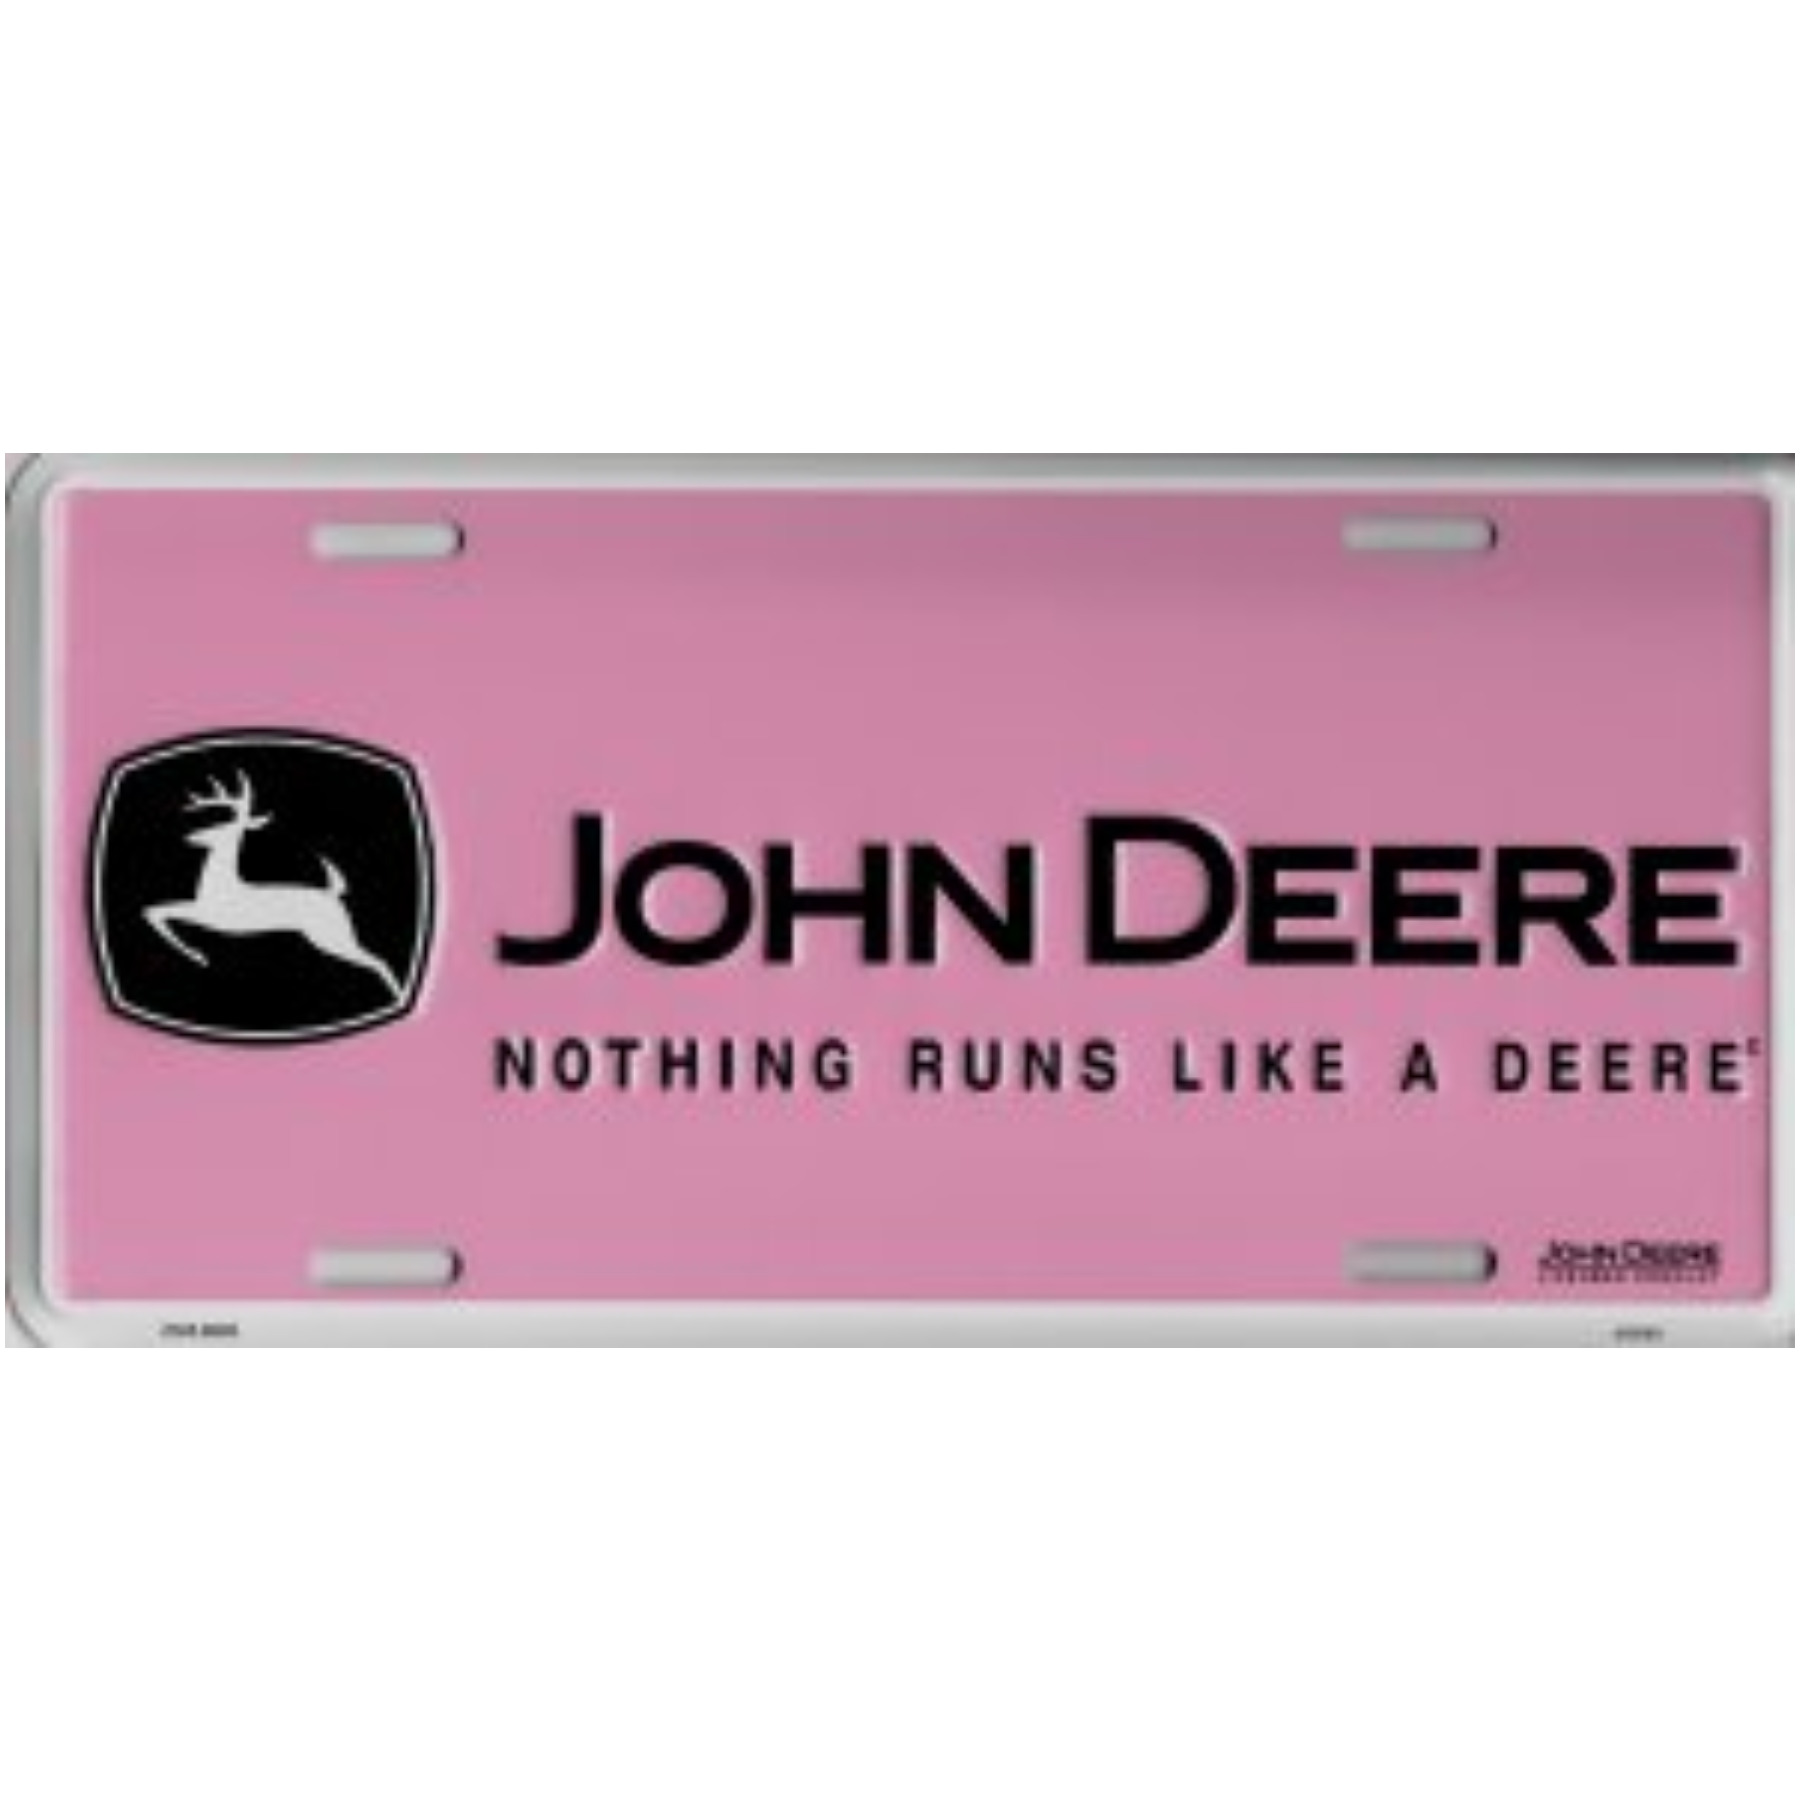 Decor Time John Deere Pink Metal License Plate - Pricefalls.com